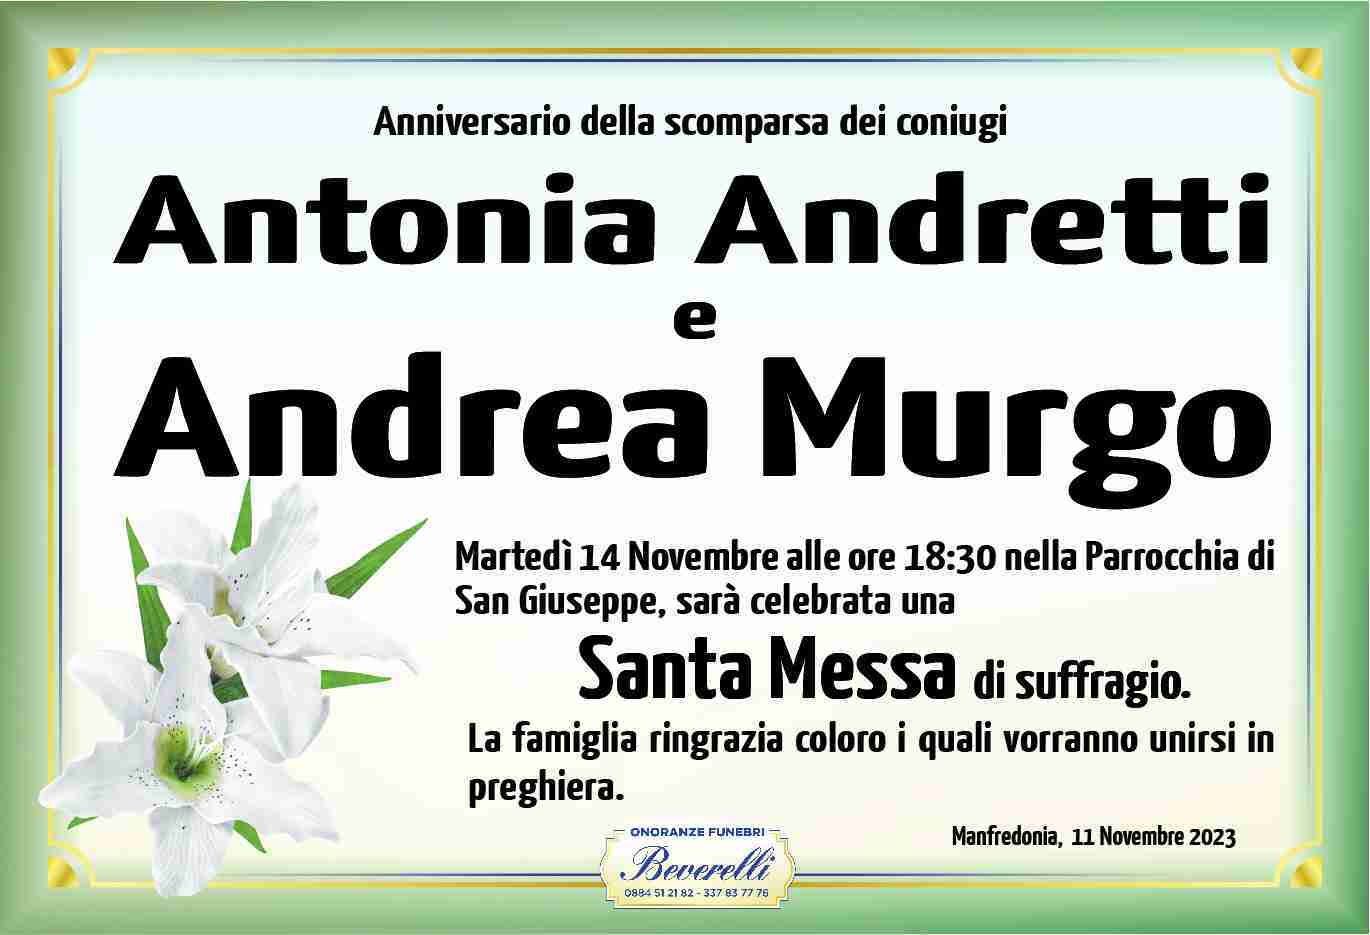 Antonia Andretti